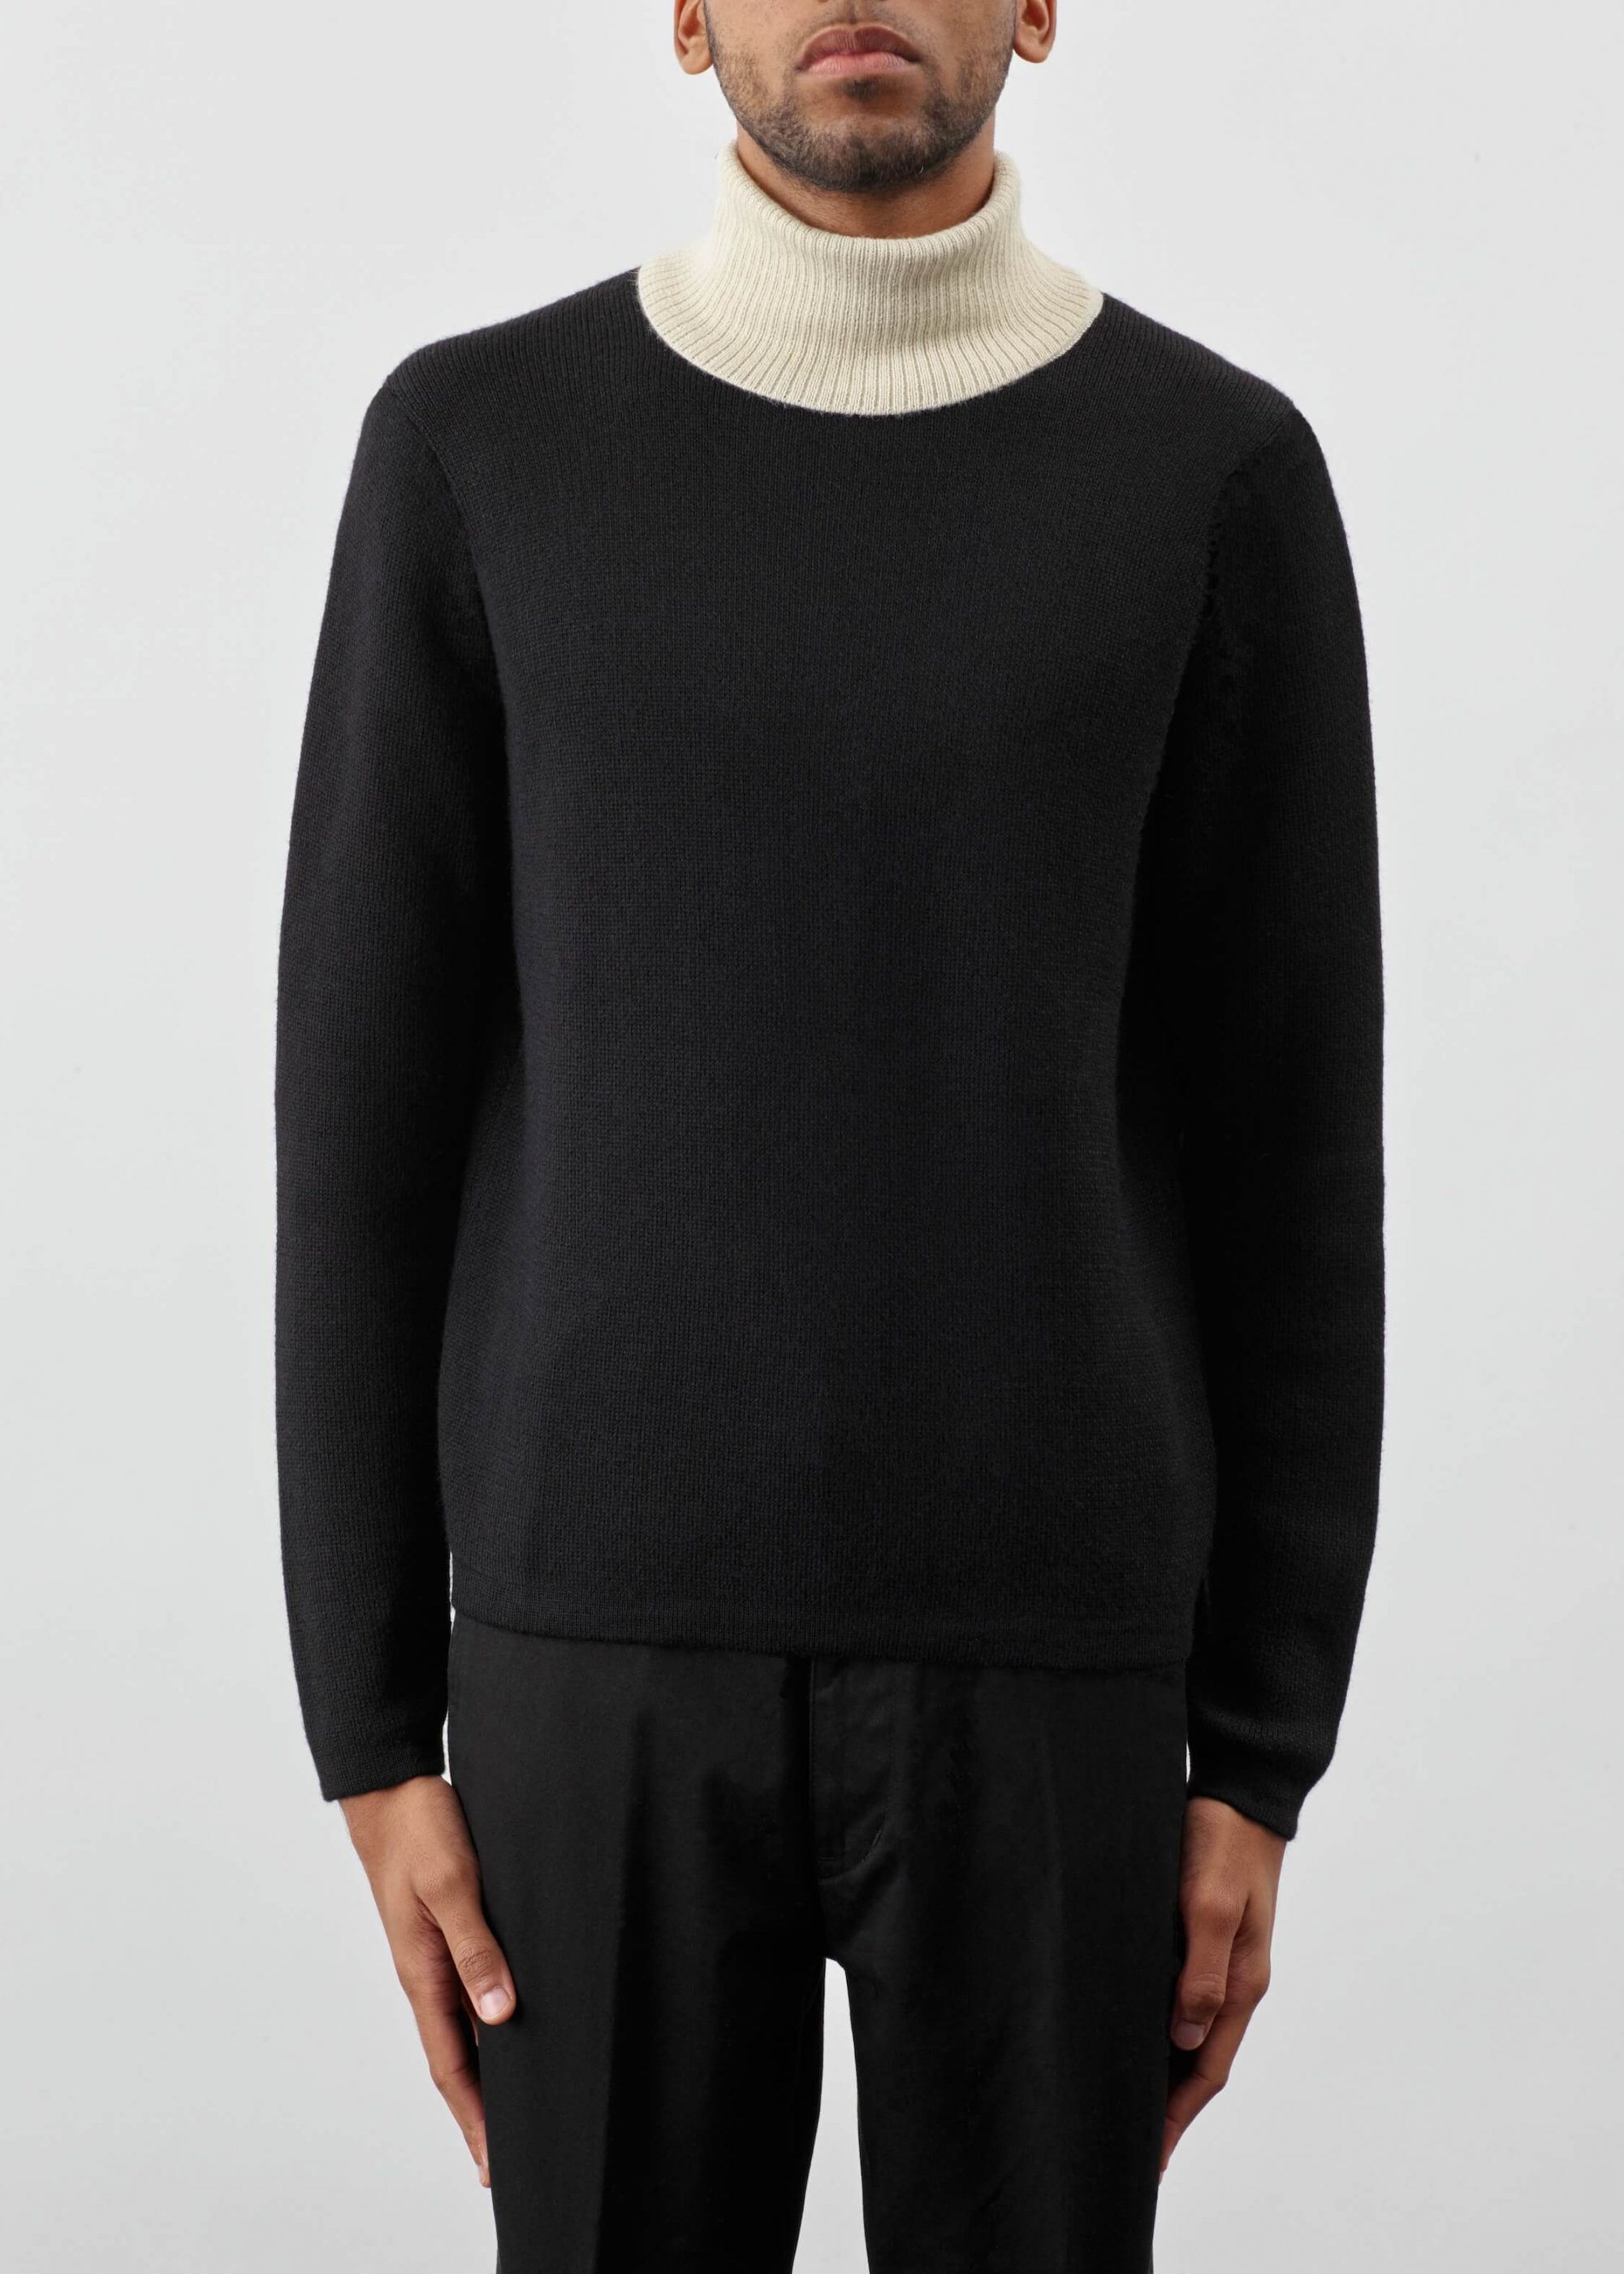 Product image for »Clergy« Turtleneck Sweater Baby Alpaca | Black Ecru